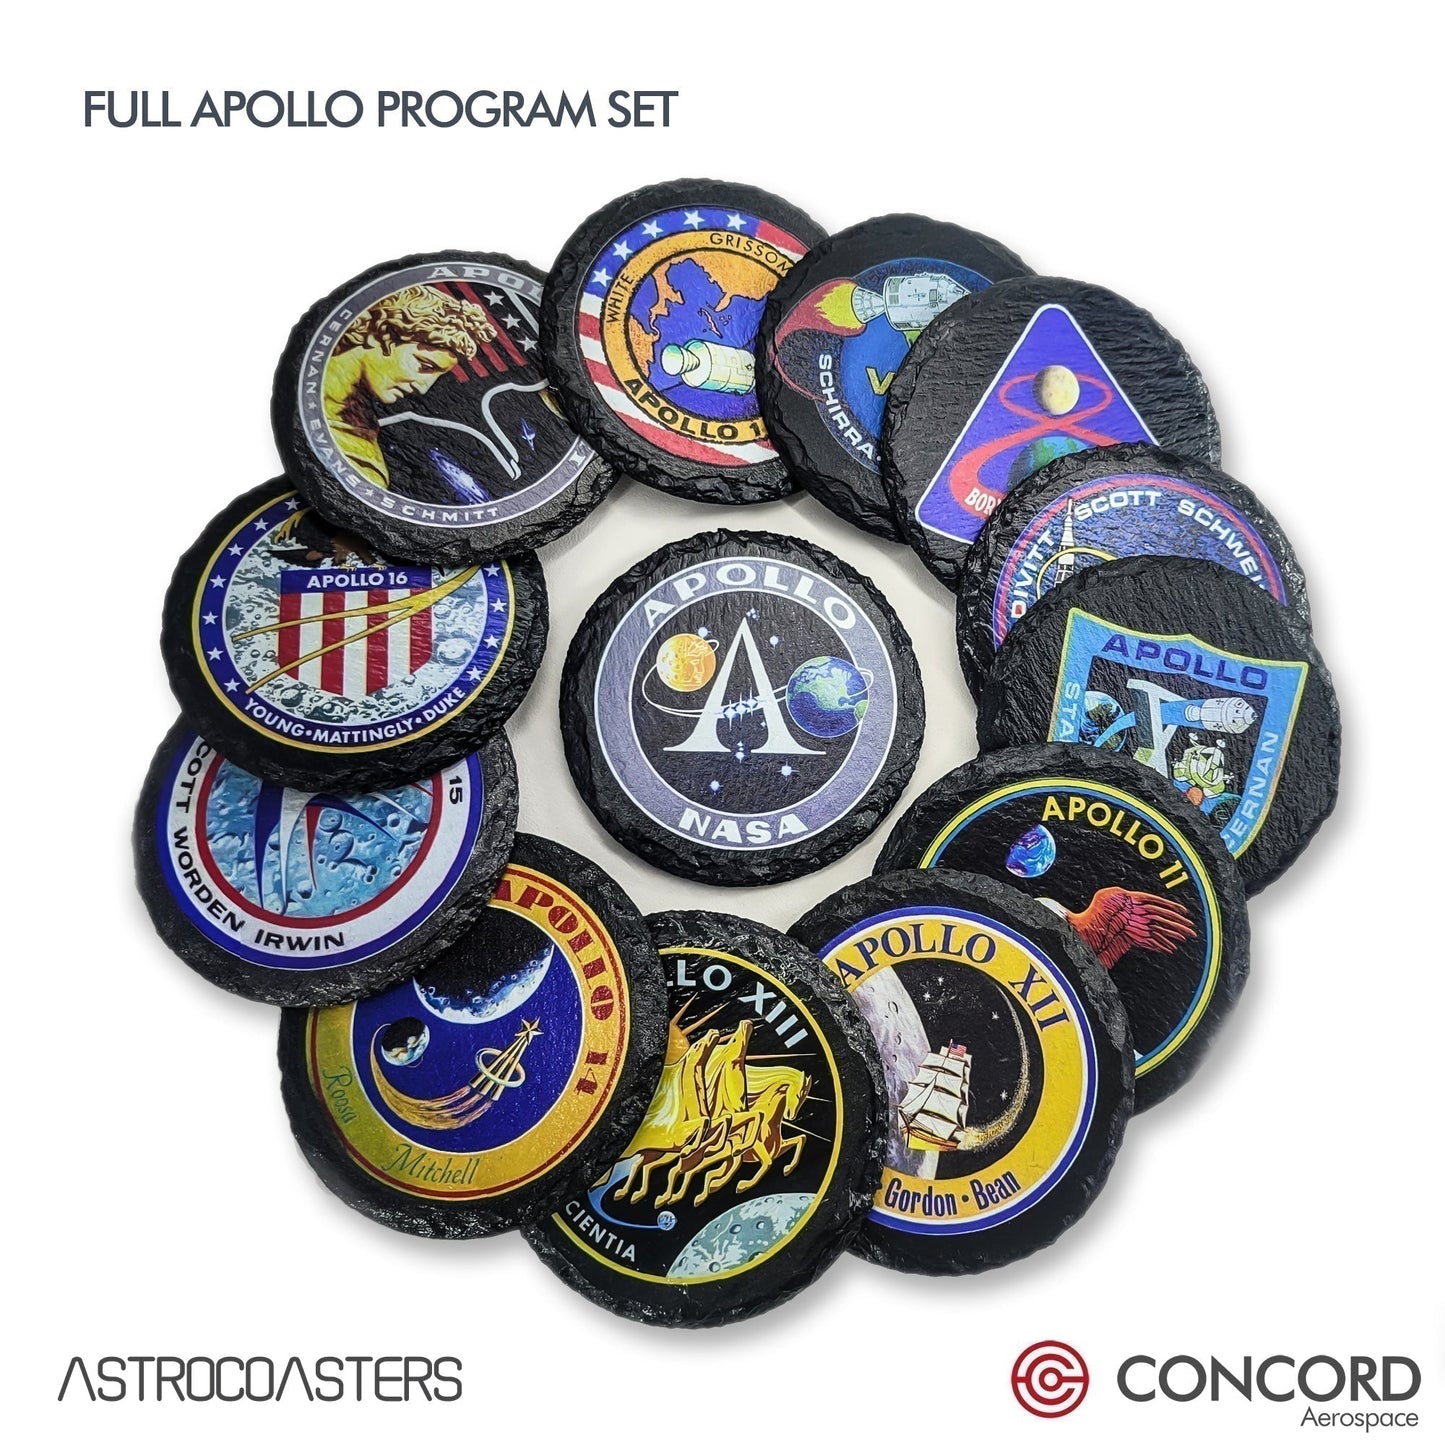 NEBULOUS HUMMUS - SLATE COASTER - Concord Aerospace Concord Aerospace Concord Aerospace Coasters